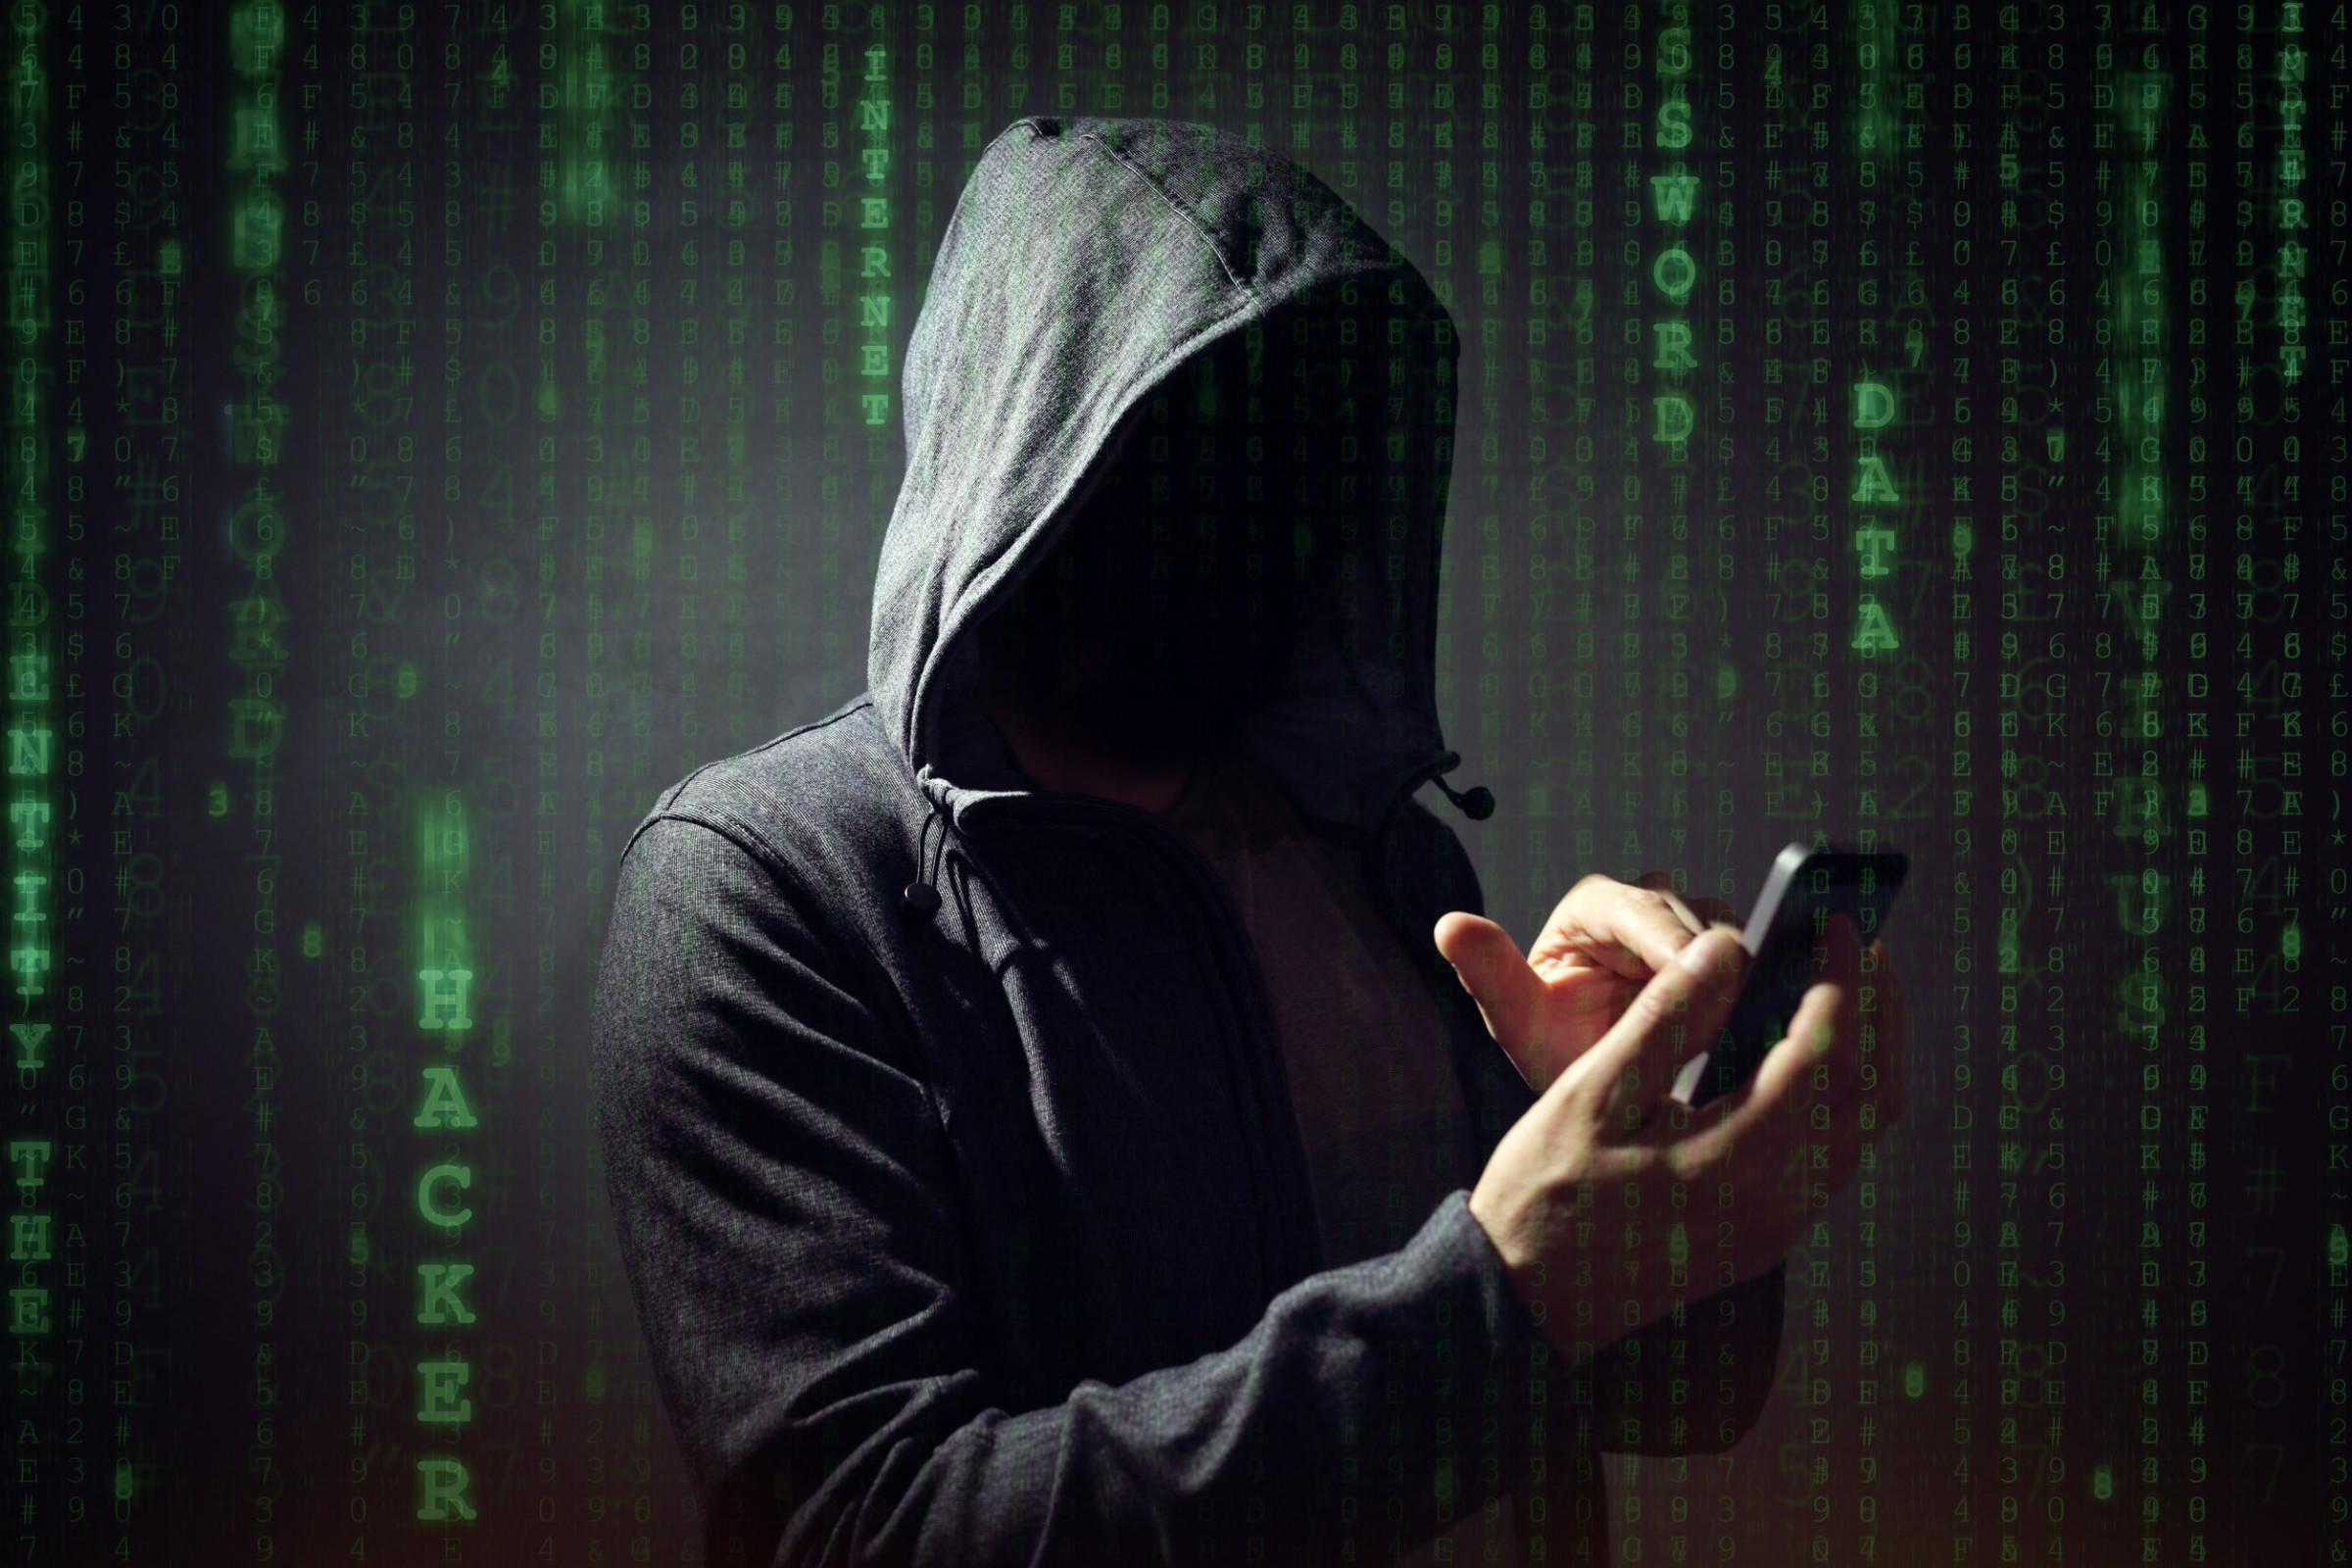 mobilni malware hacker eset